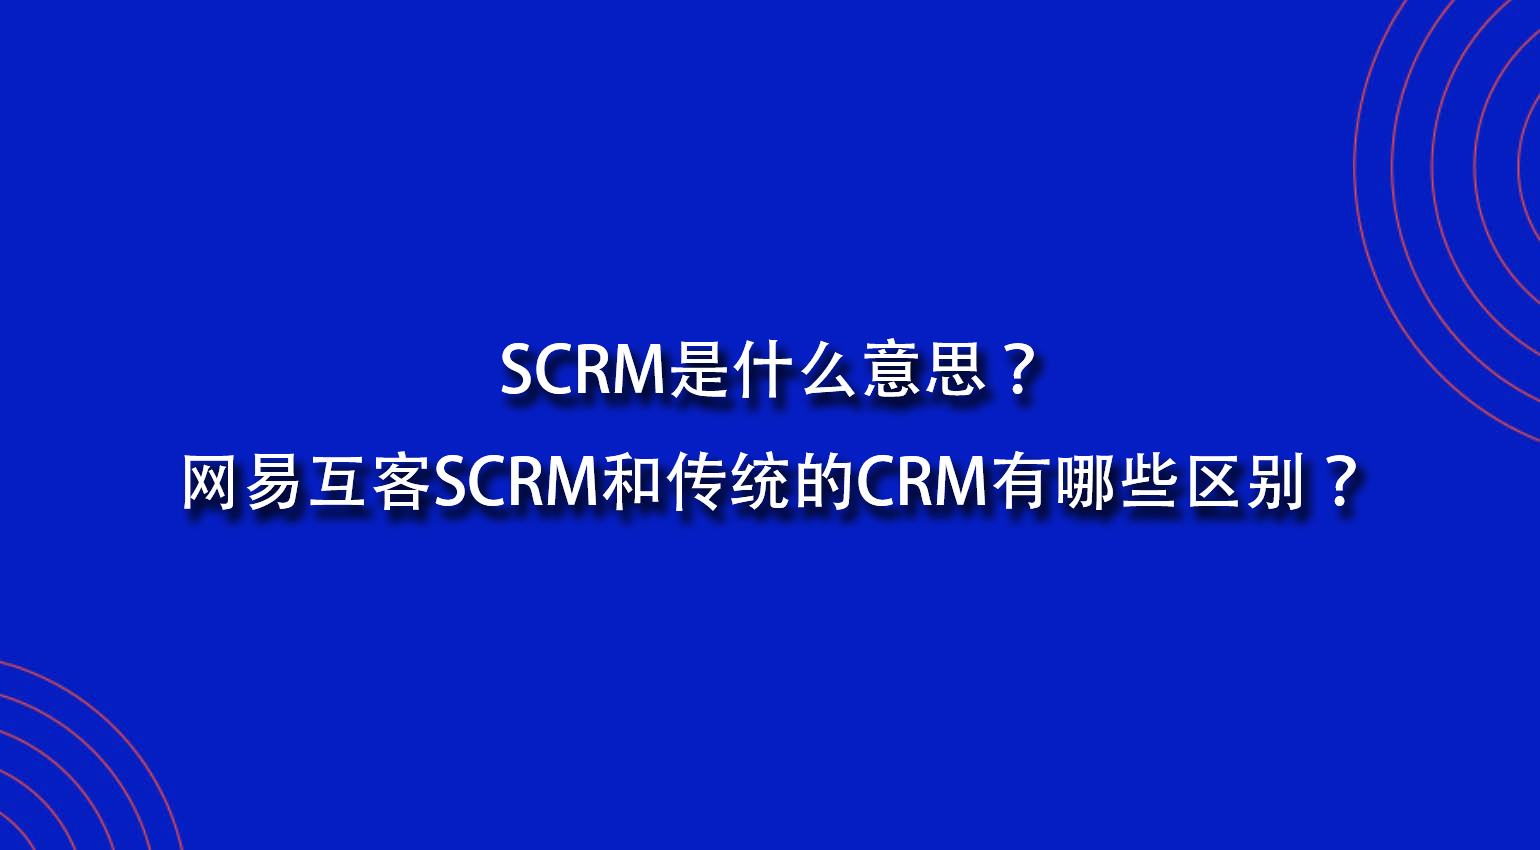 SCRM是什么意思？网易互客SCRM和传统的CRM有哪些区别？